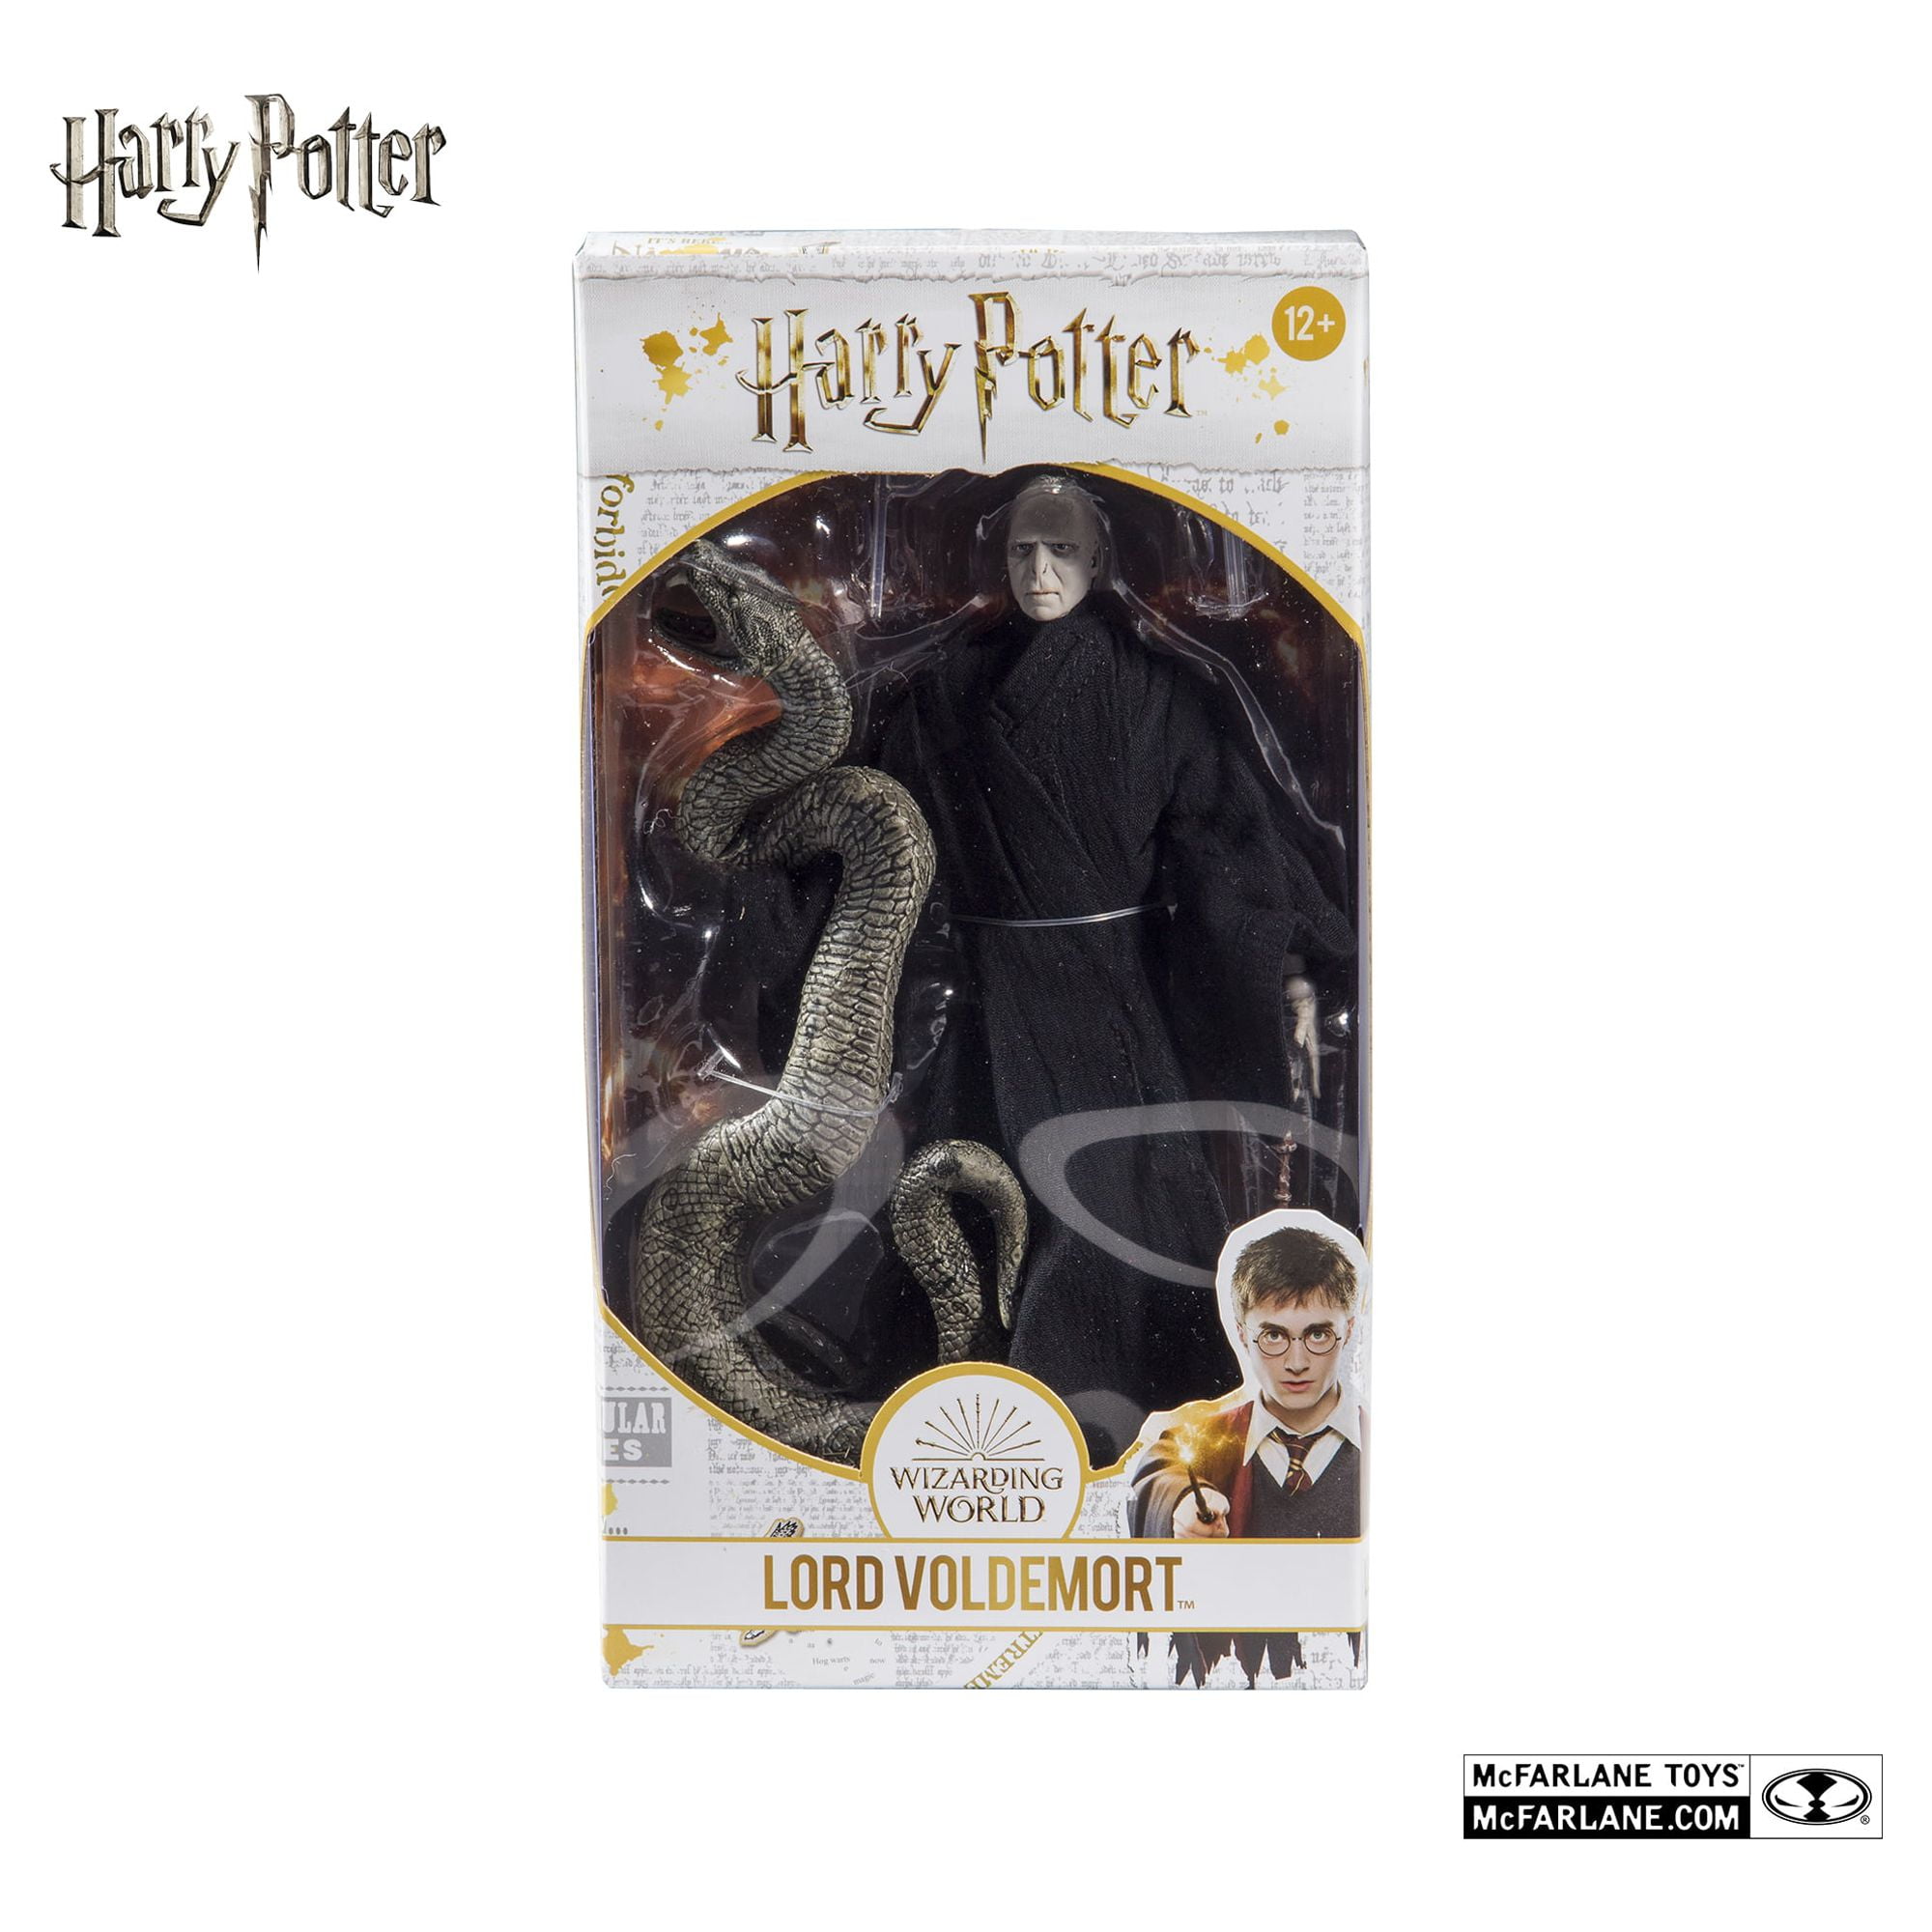  McFarlane Toys Harry Potter - Figura de acción de Lord